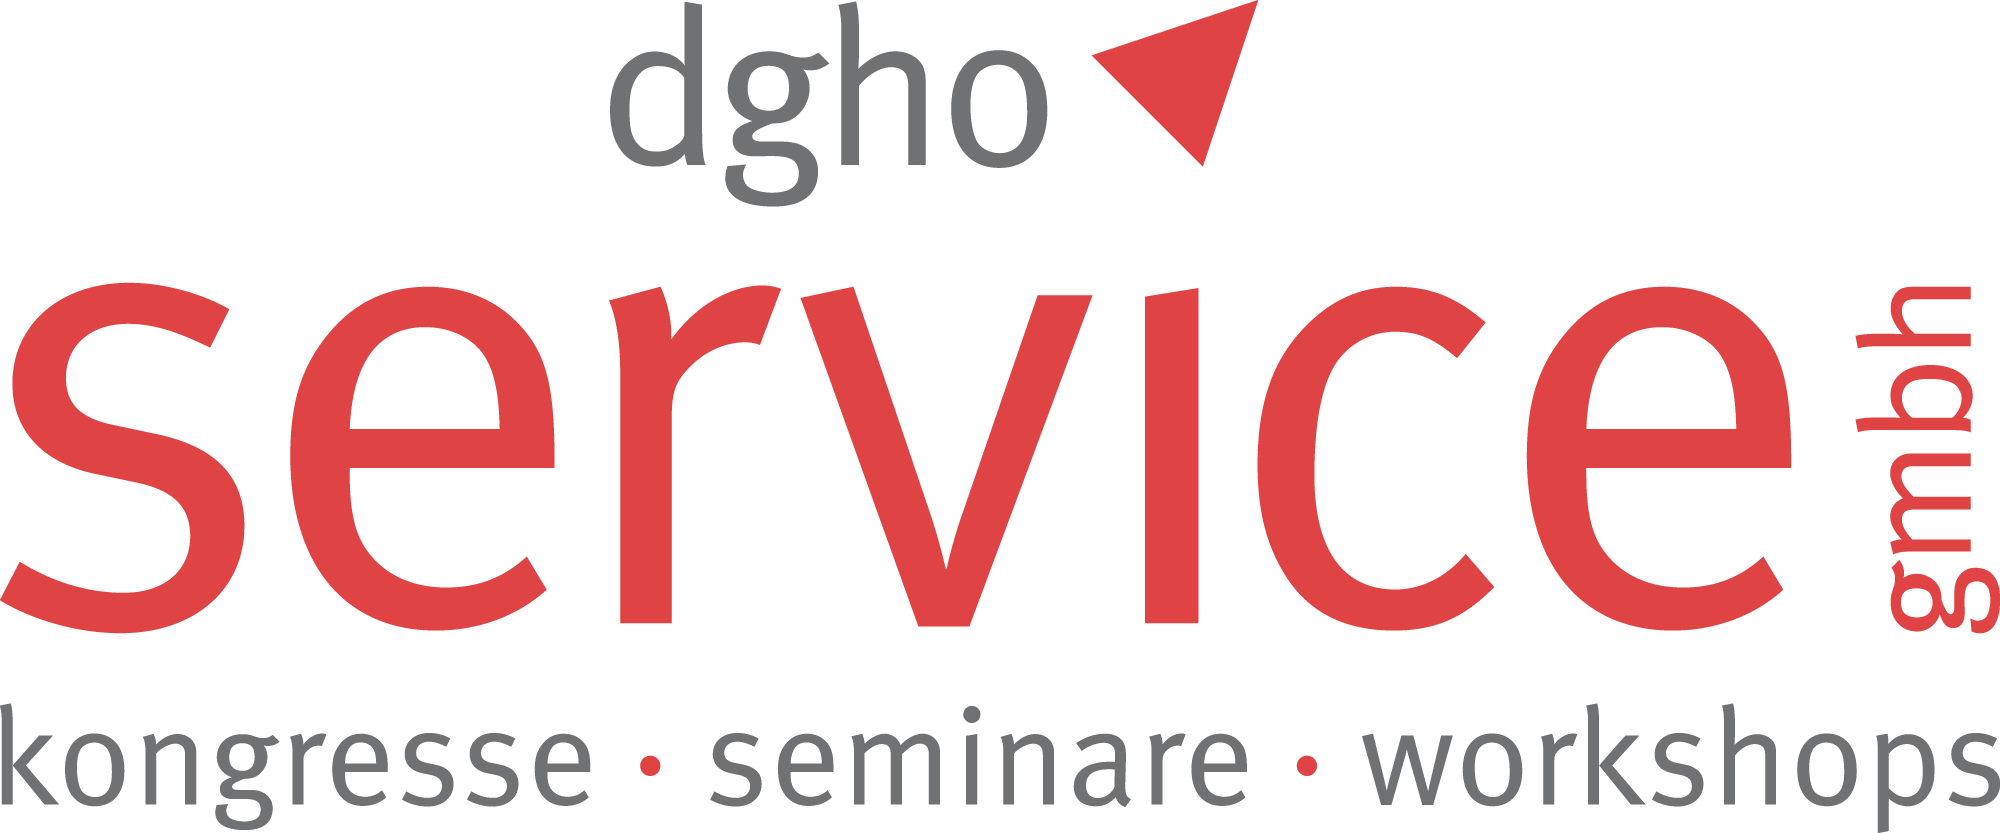 Logo_DGHO-Service_2017_Claim.png